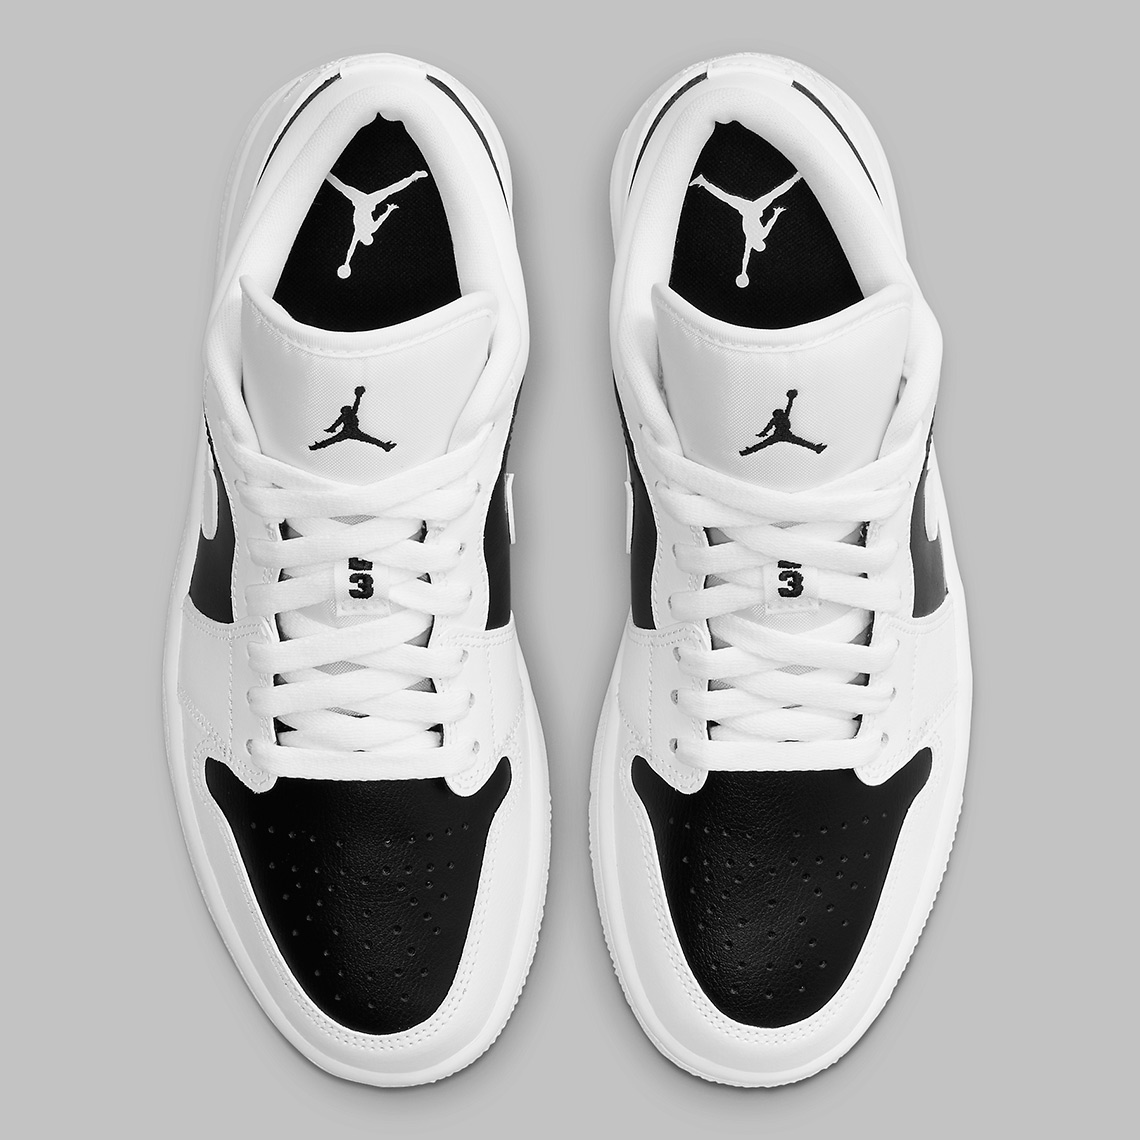 The Women S Air Jordan 1 Low Goes Simple White And Black Street Sense